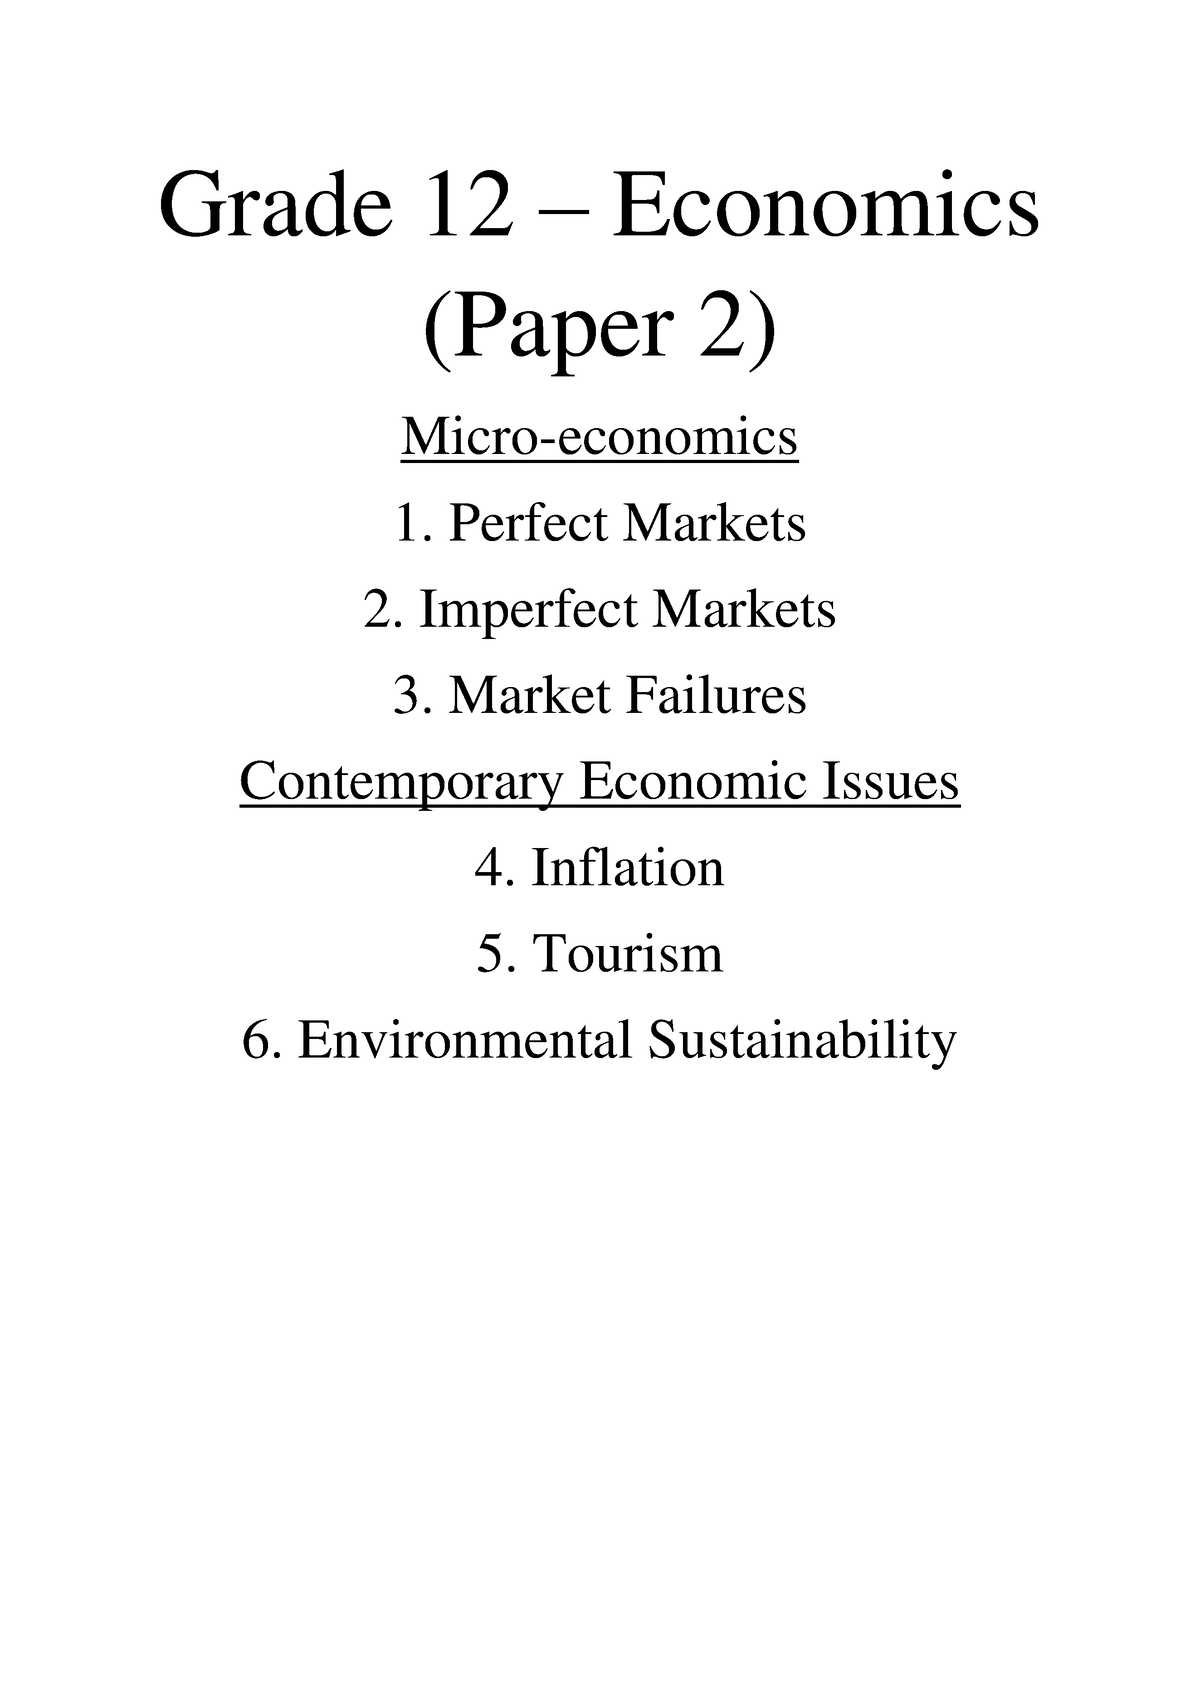 possible essays for economics paper 2 grade 12